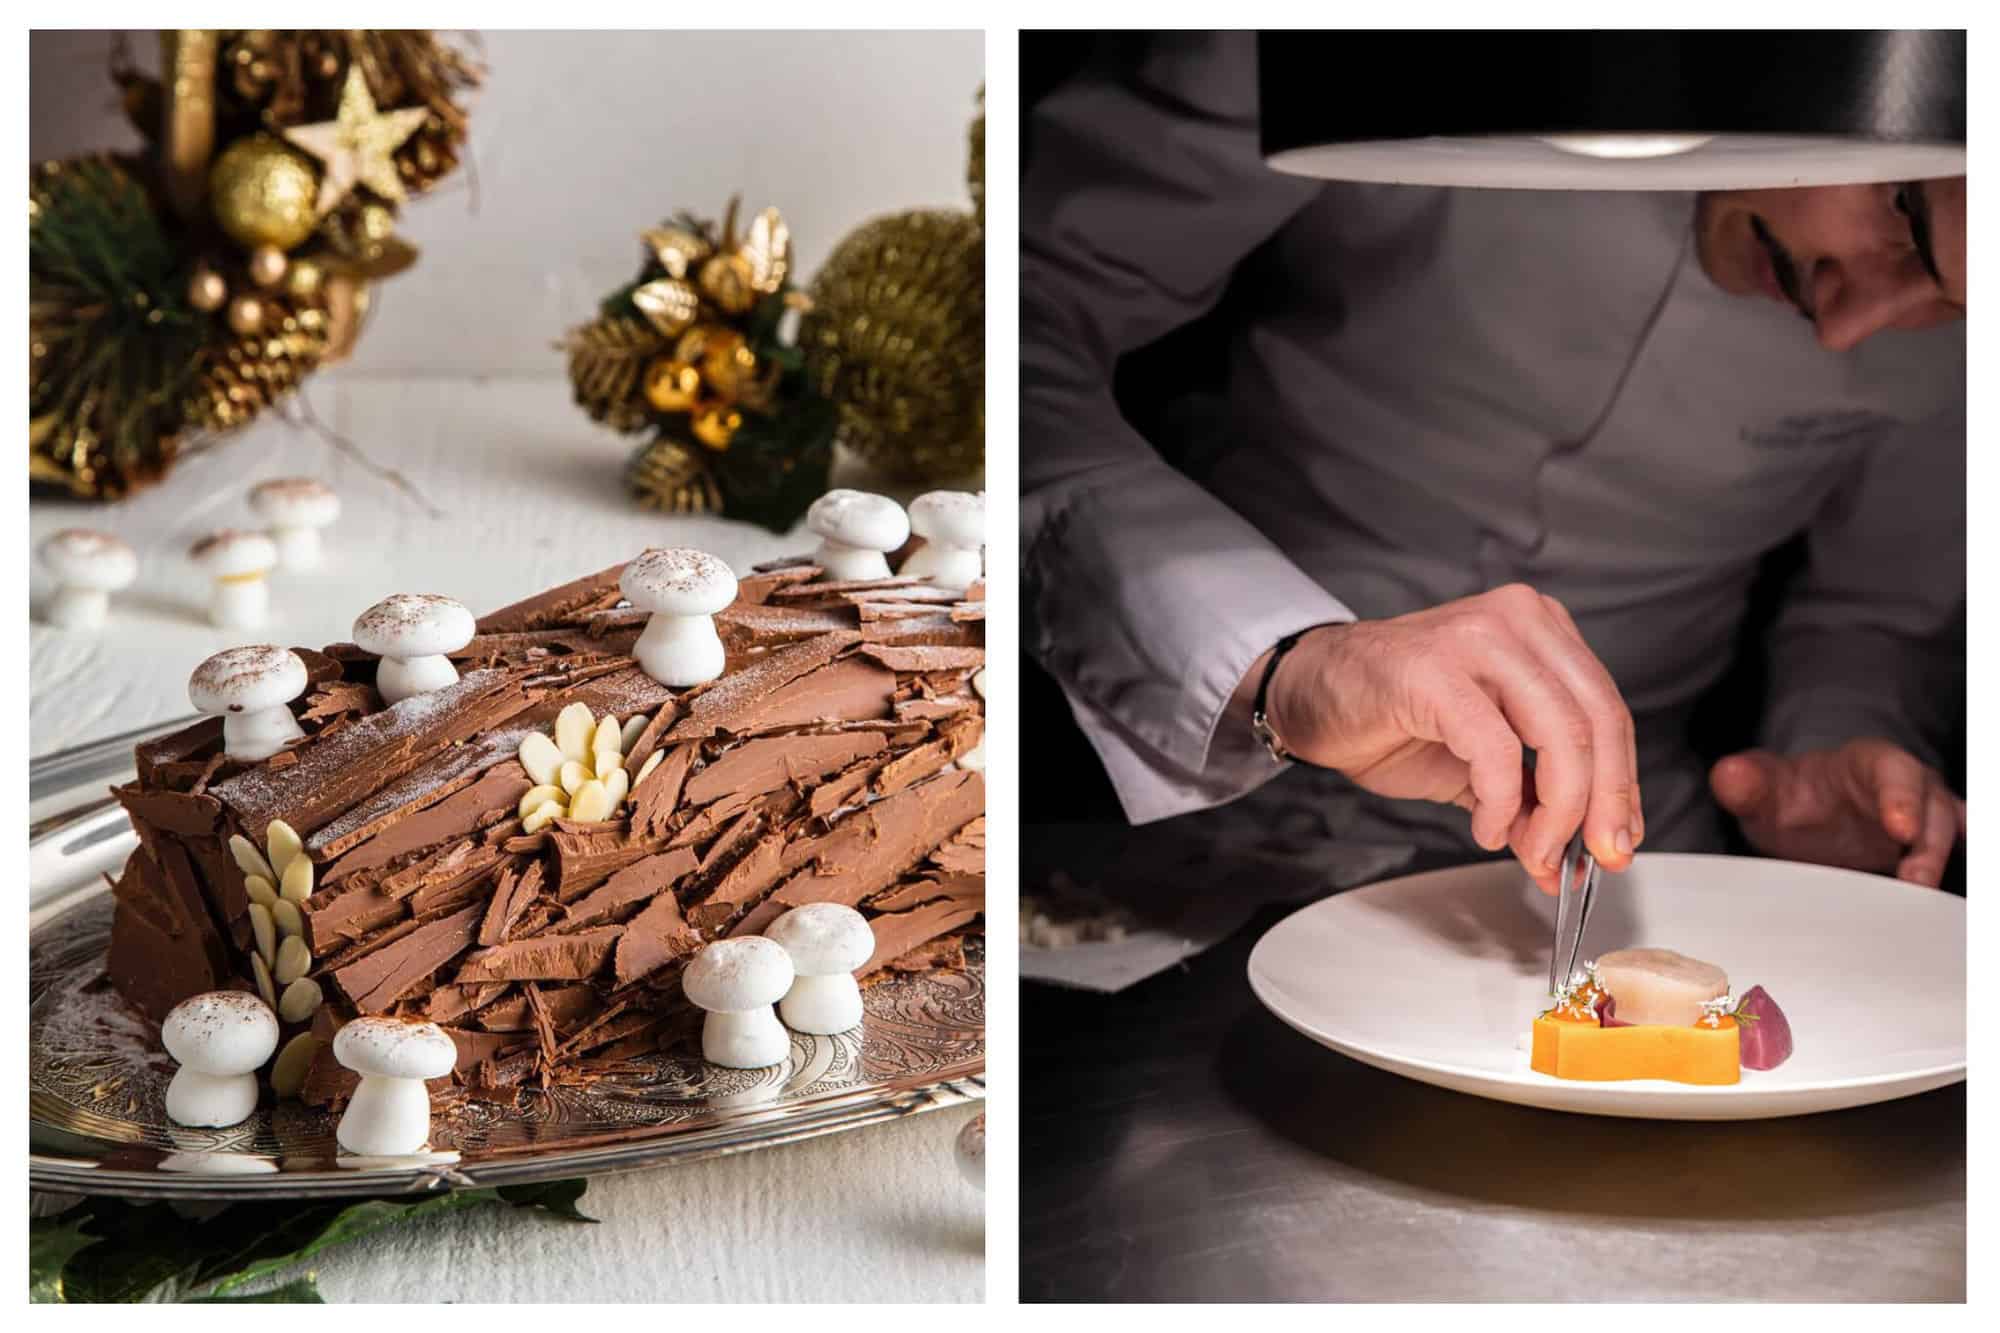 Left a photo of a chocolate bûche de Noël. Right a photo of a chef preparing a french dessert. 